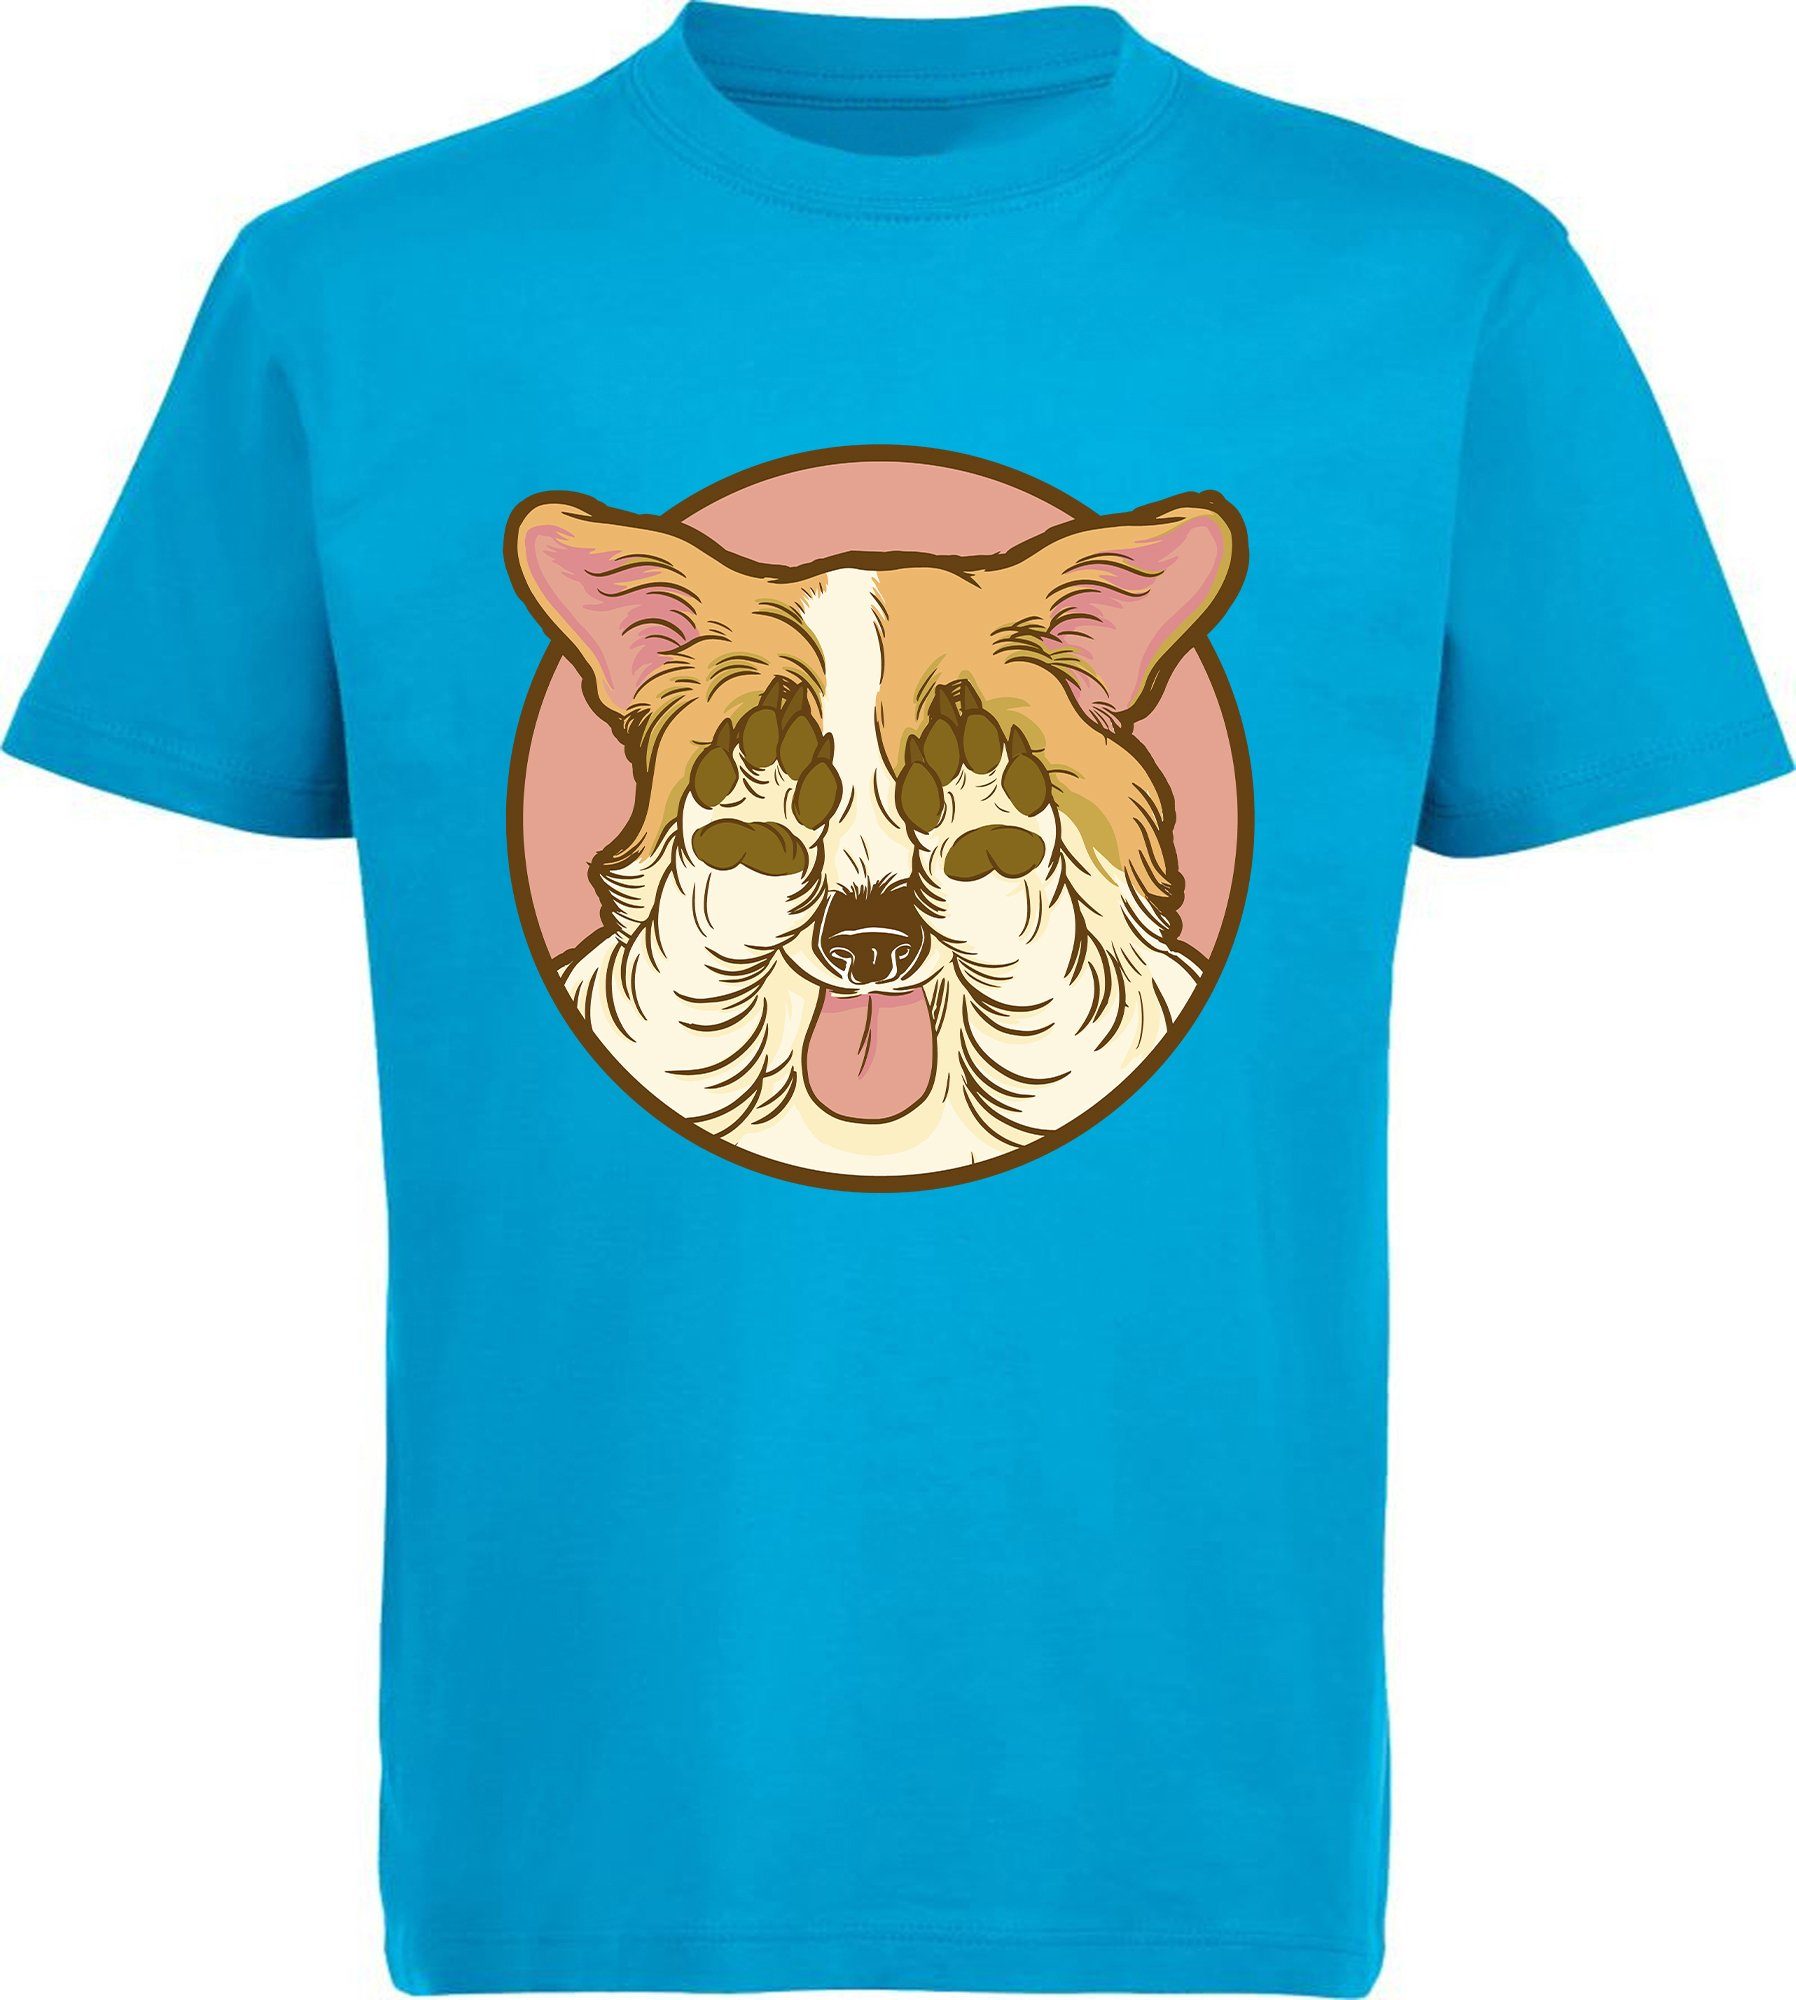 MyDesign24 Print-Shirt bedrucktes Kinder Hunde Aufdruck, i226 aqua Baumwollshirt blau Corgi mit seine T-Shirt der - zu Augen hält